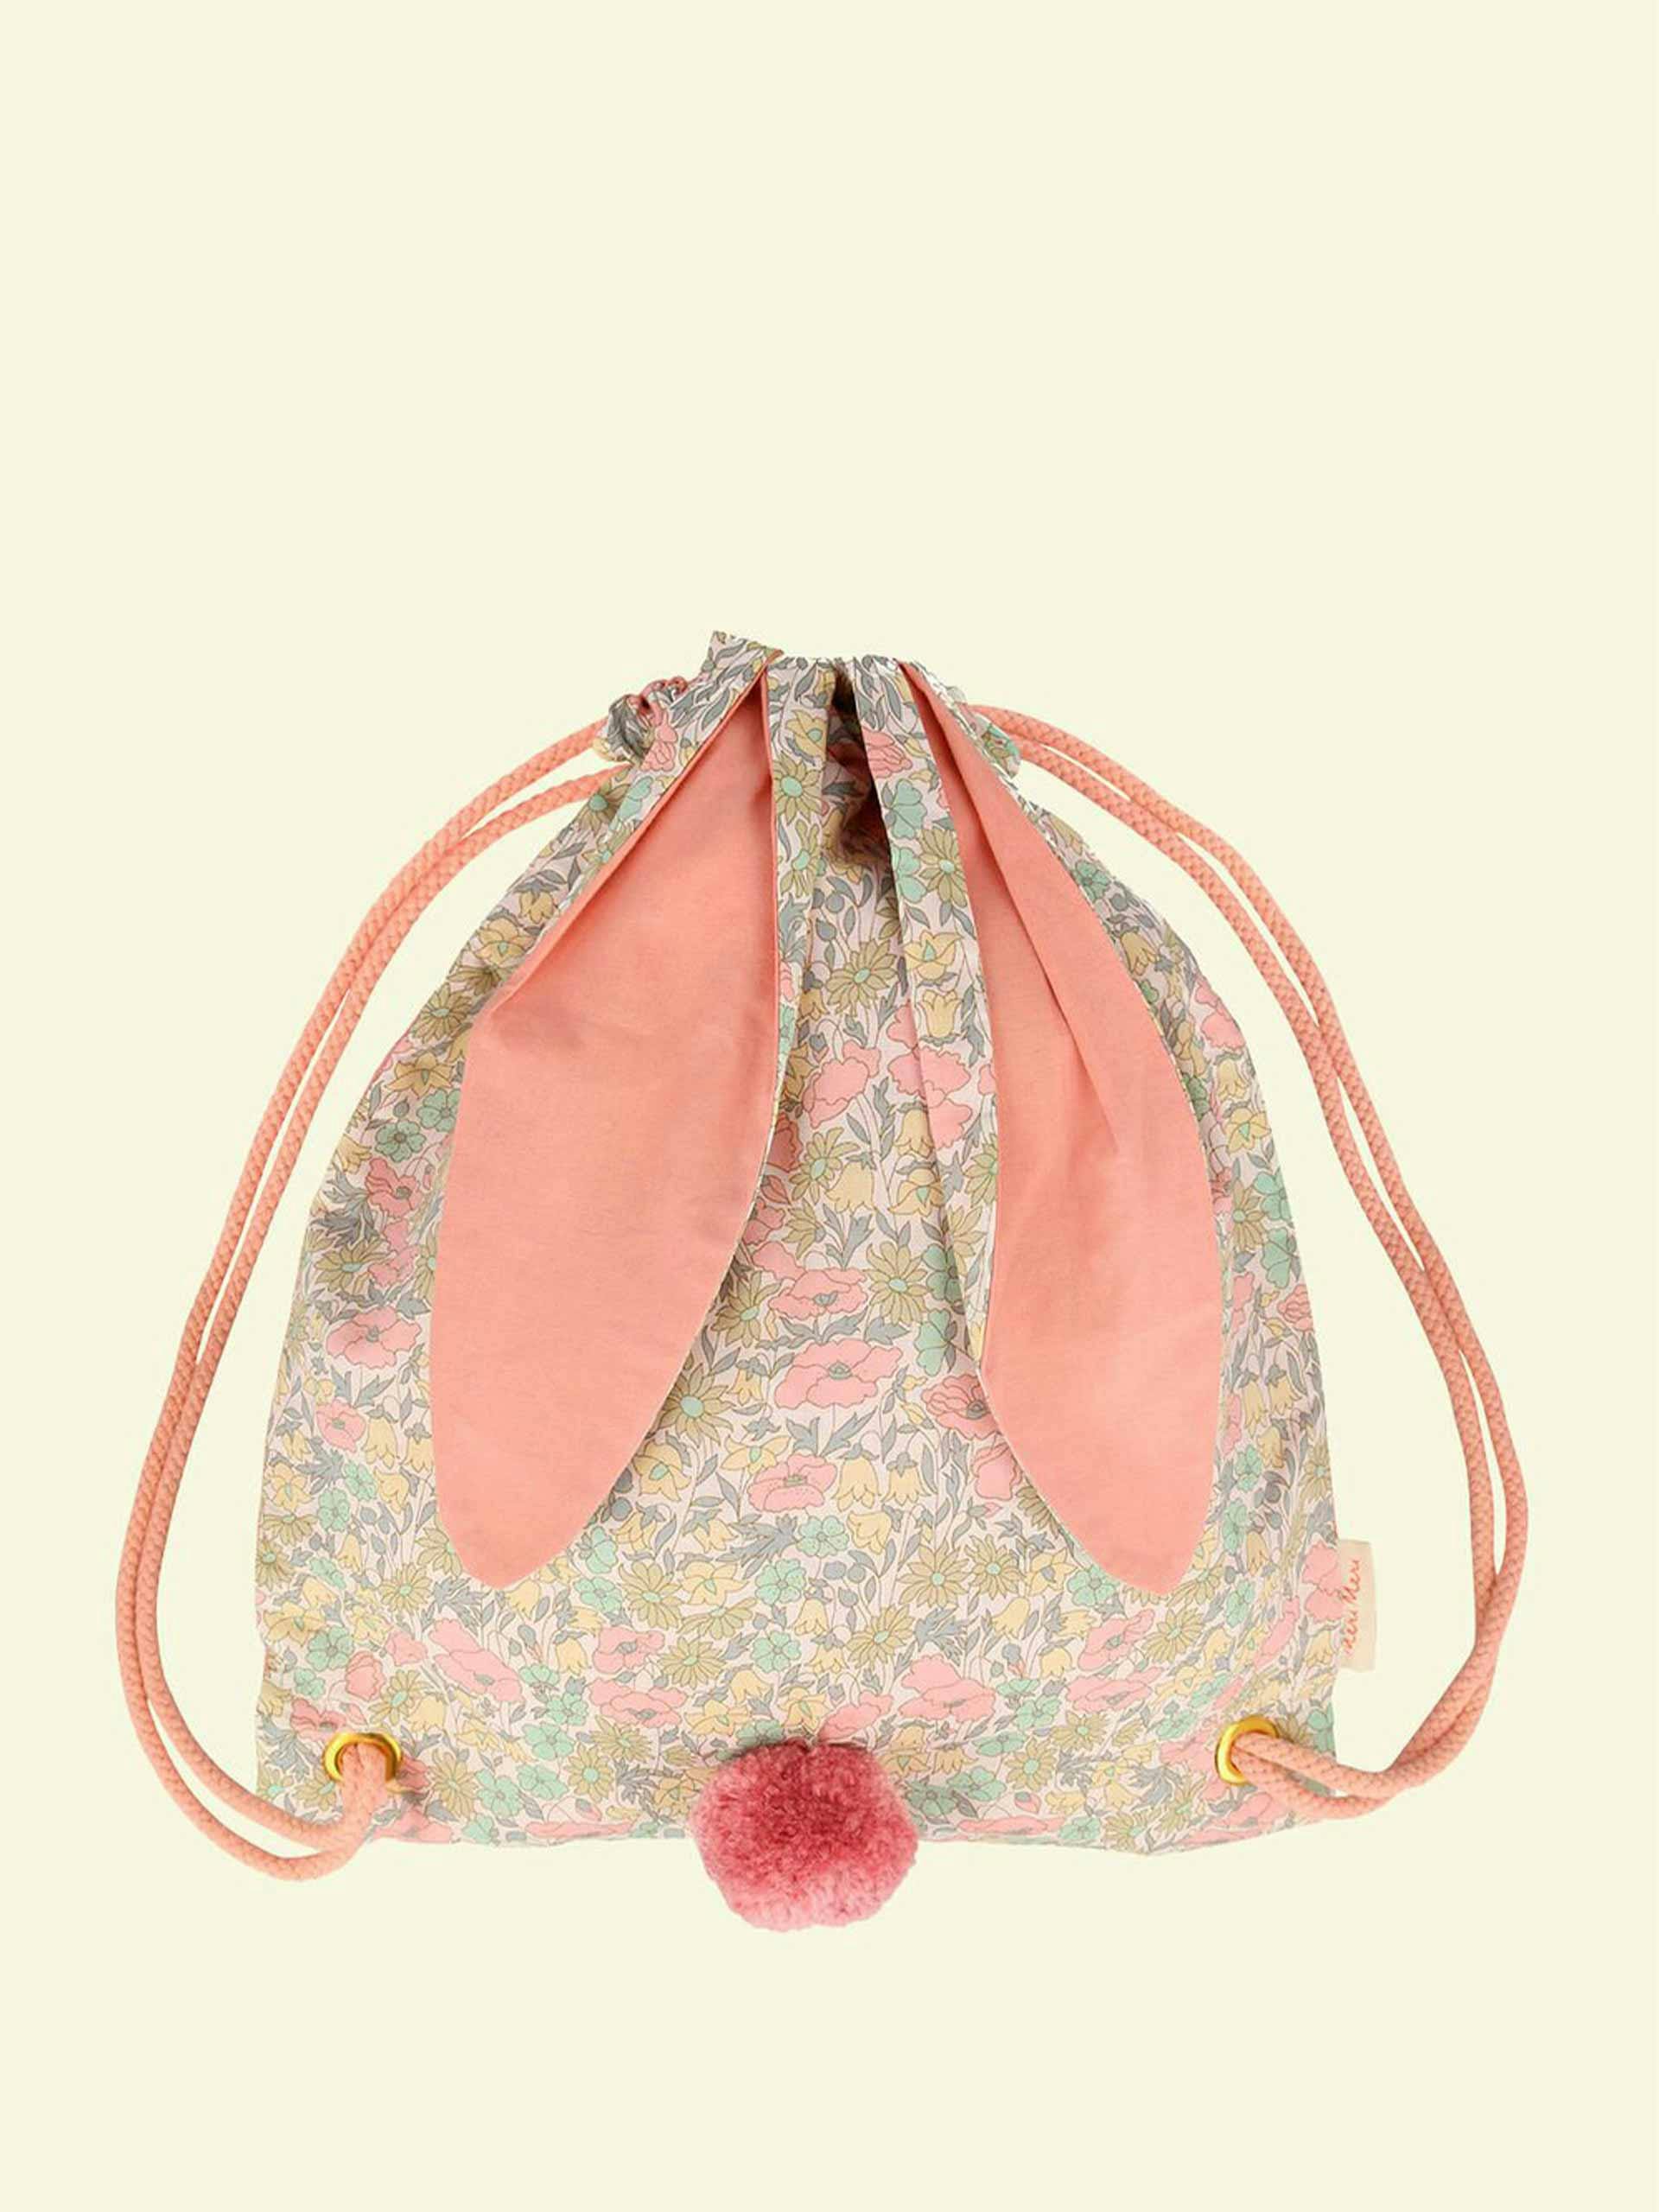 Floral bunny backpack